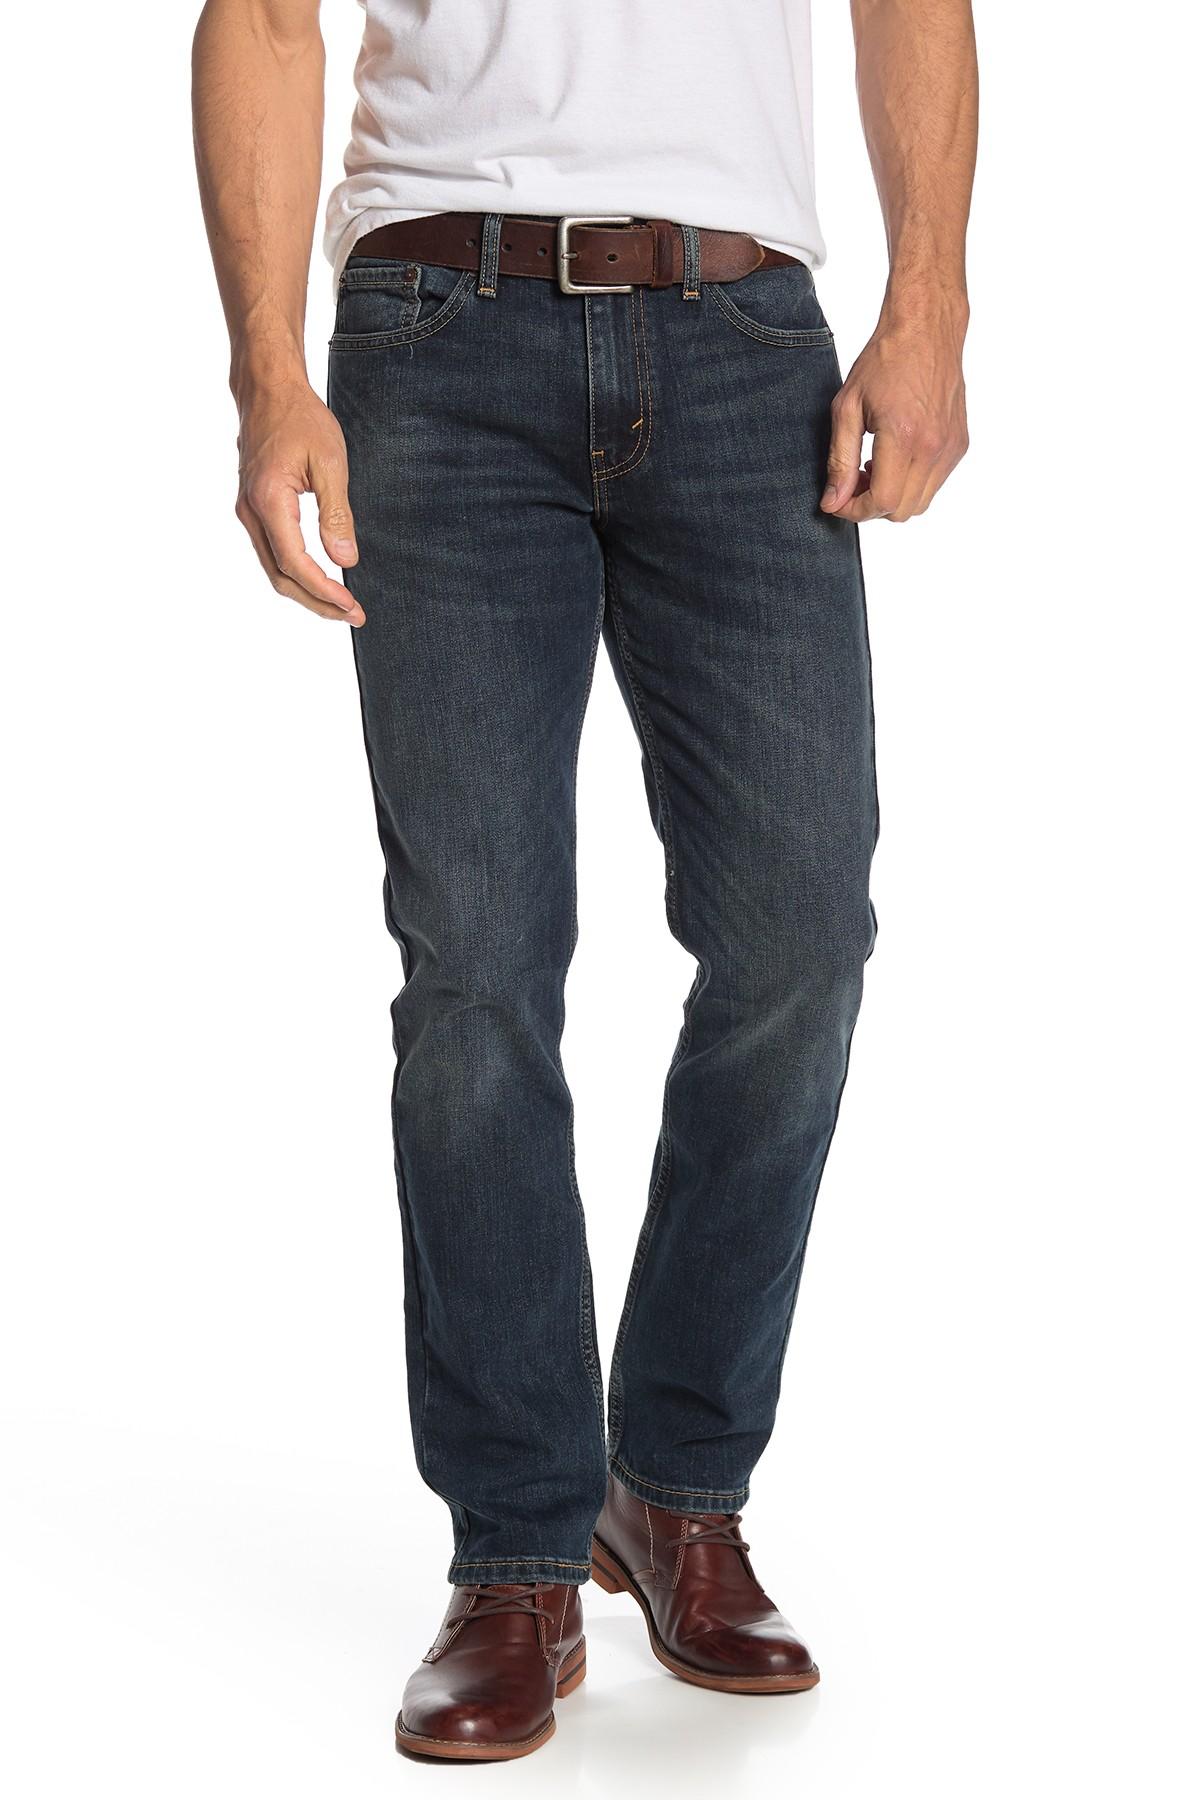 Levi's 511 Slim Fit Jeans - 30-34